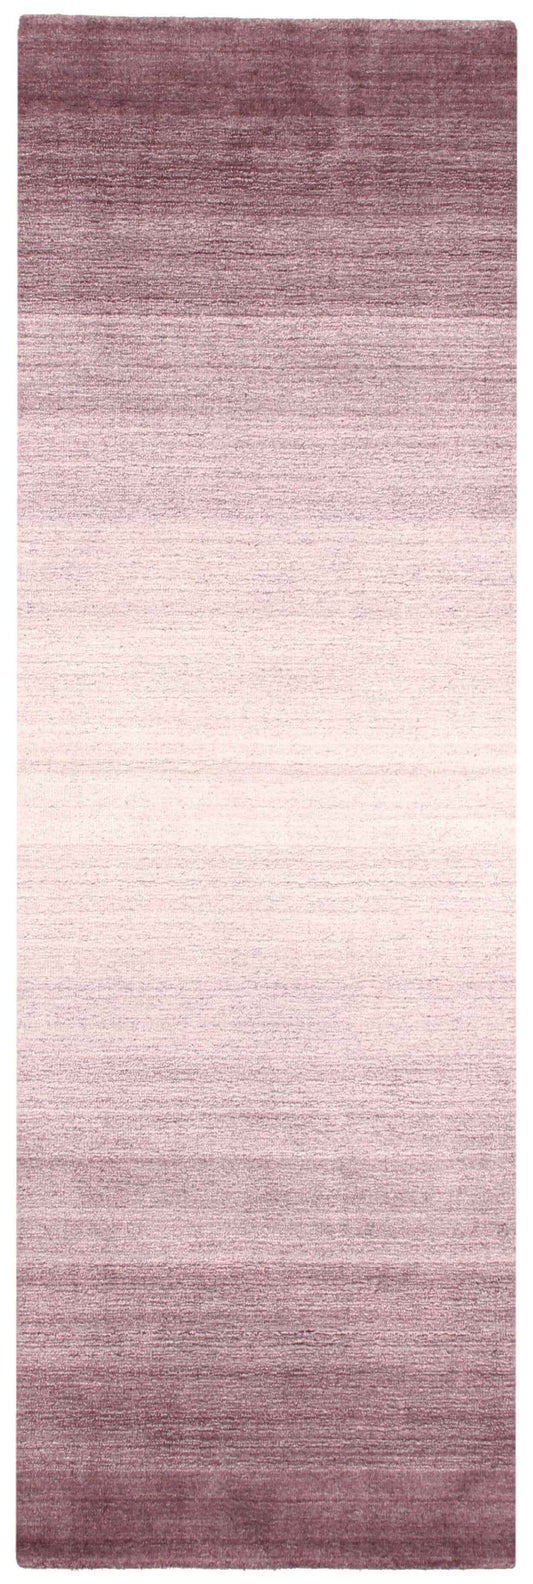 250x80 cm  Indian Wool/Viscose Purple Rug-Porpra, Purple